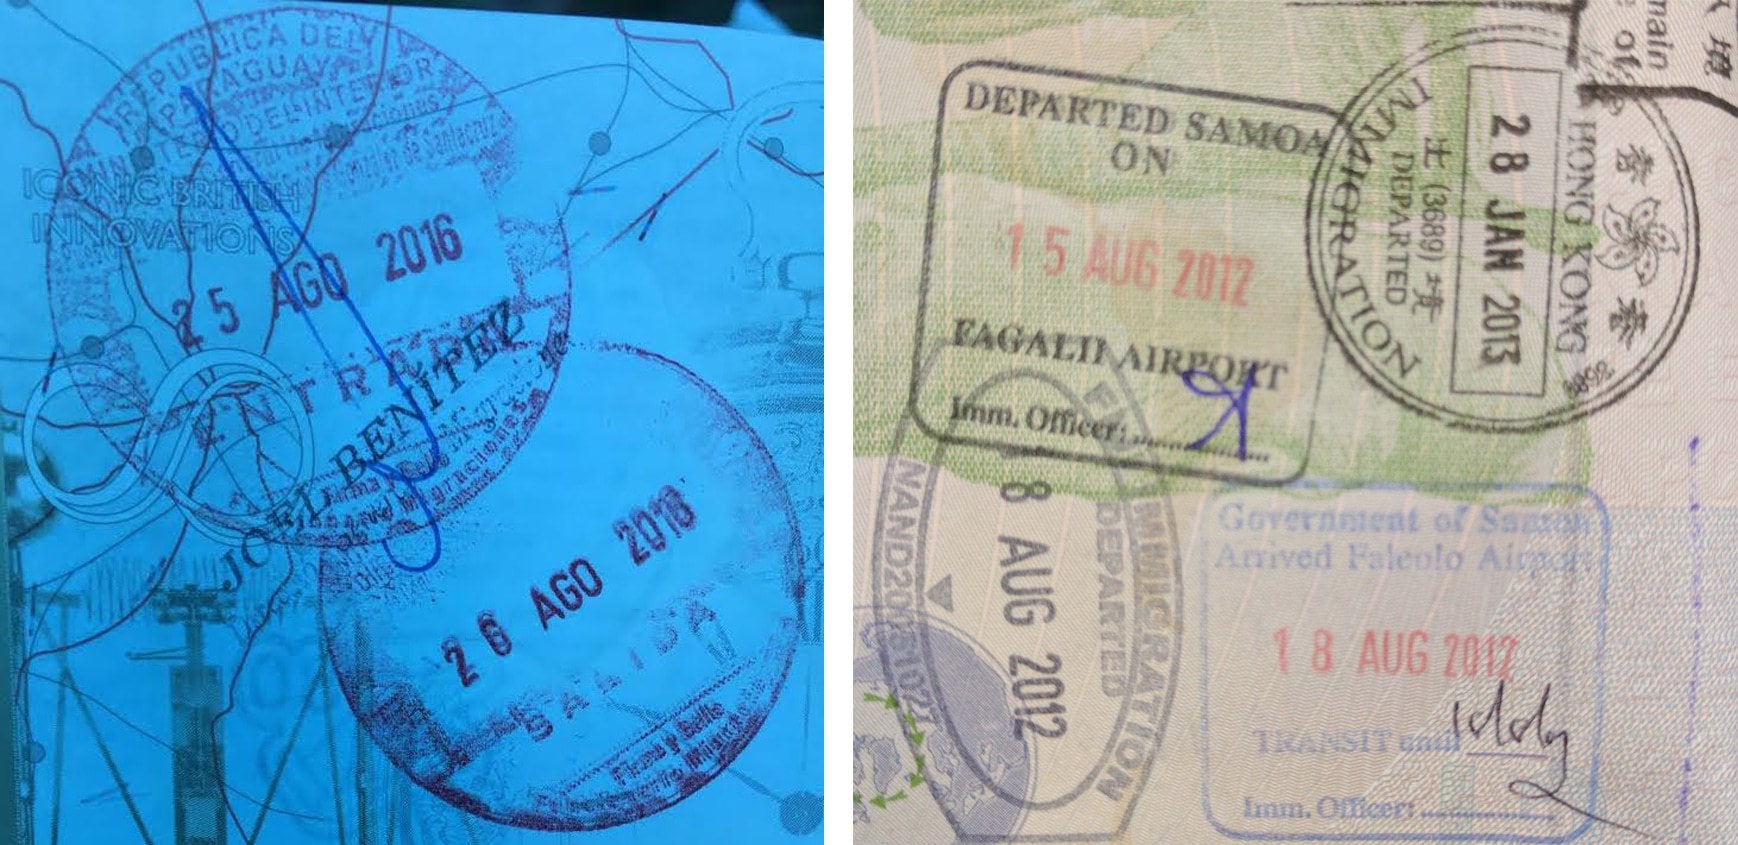 Passport stamp for Paraguay and Samoa